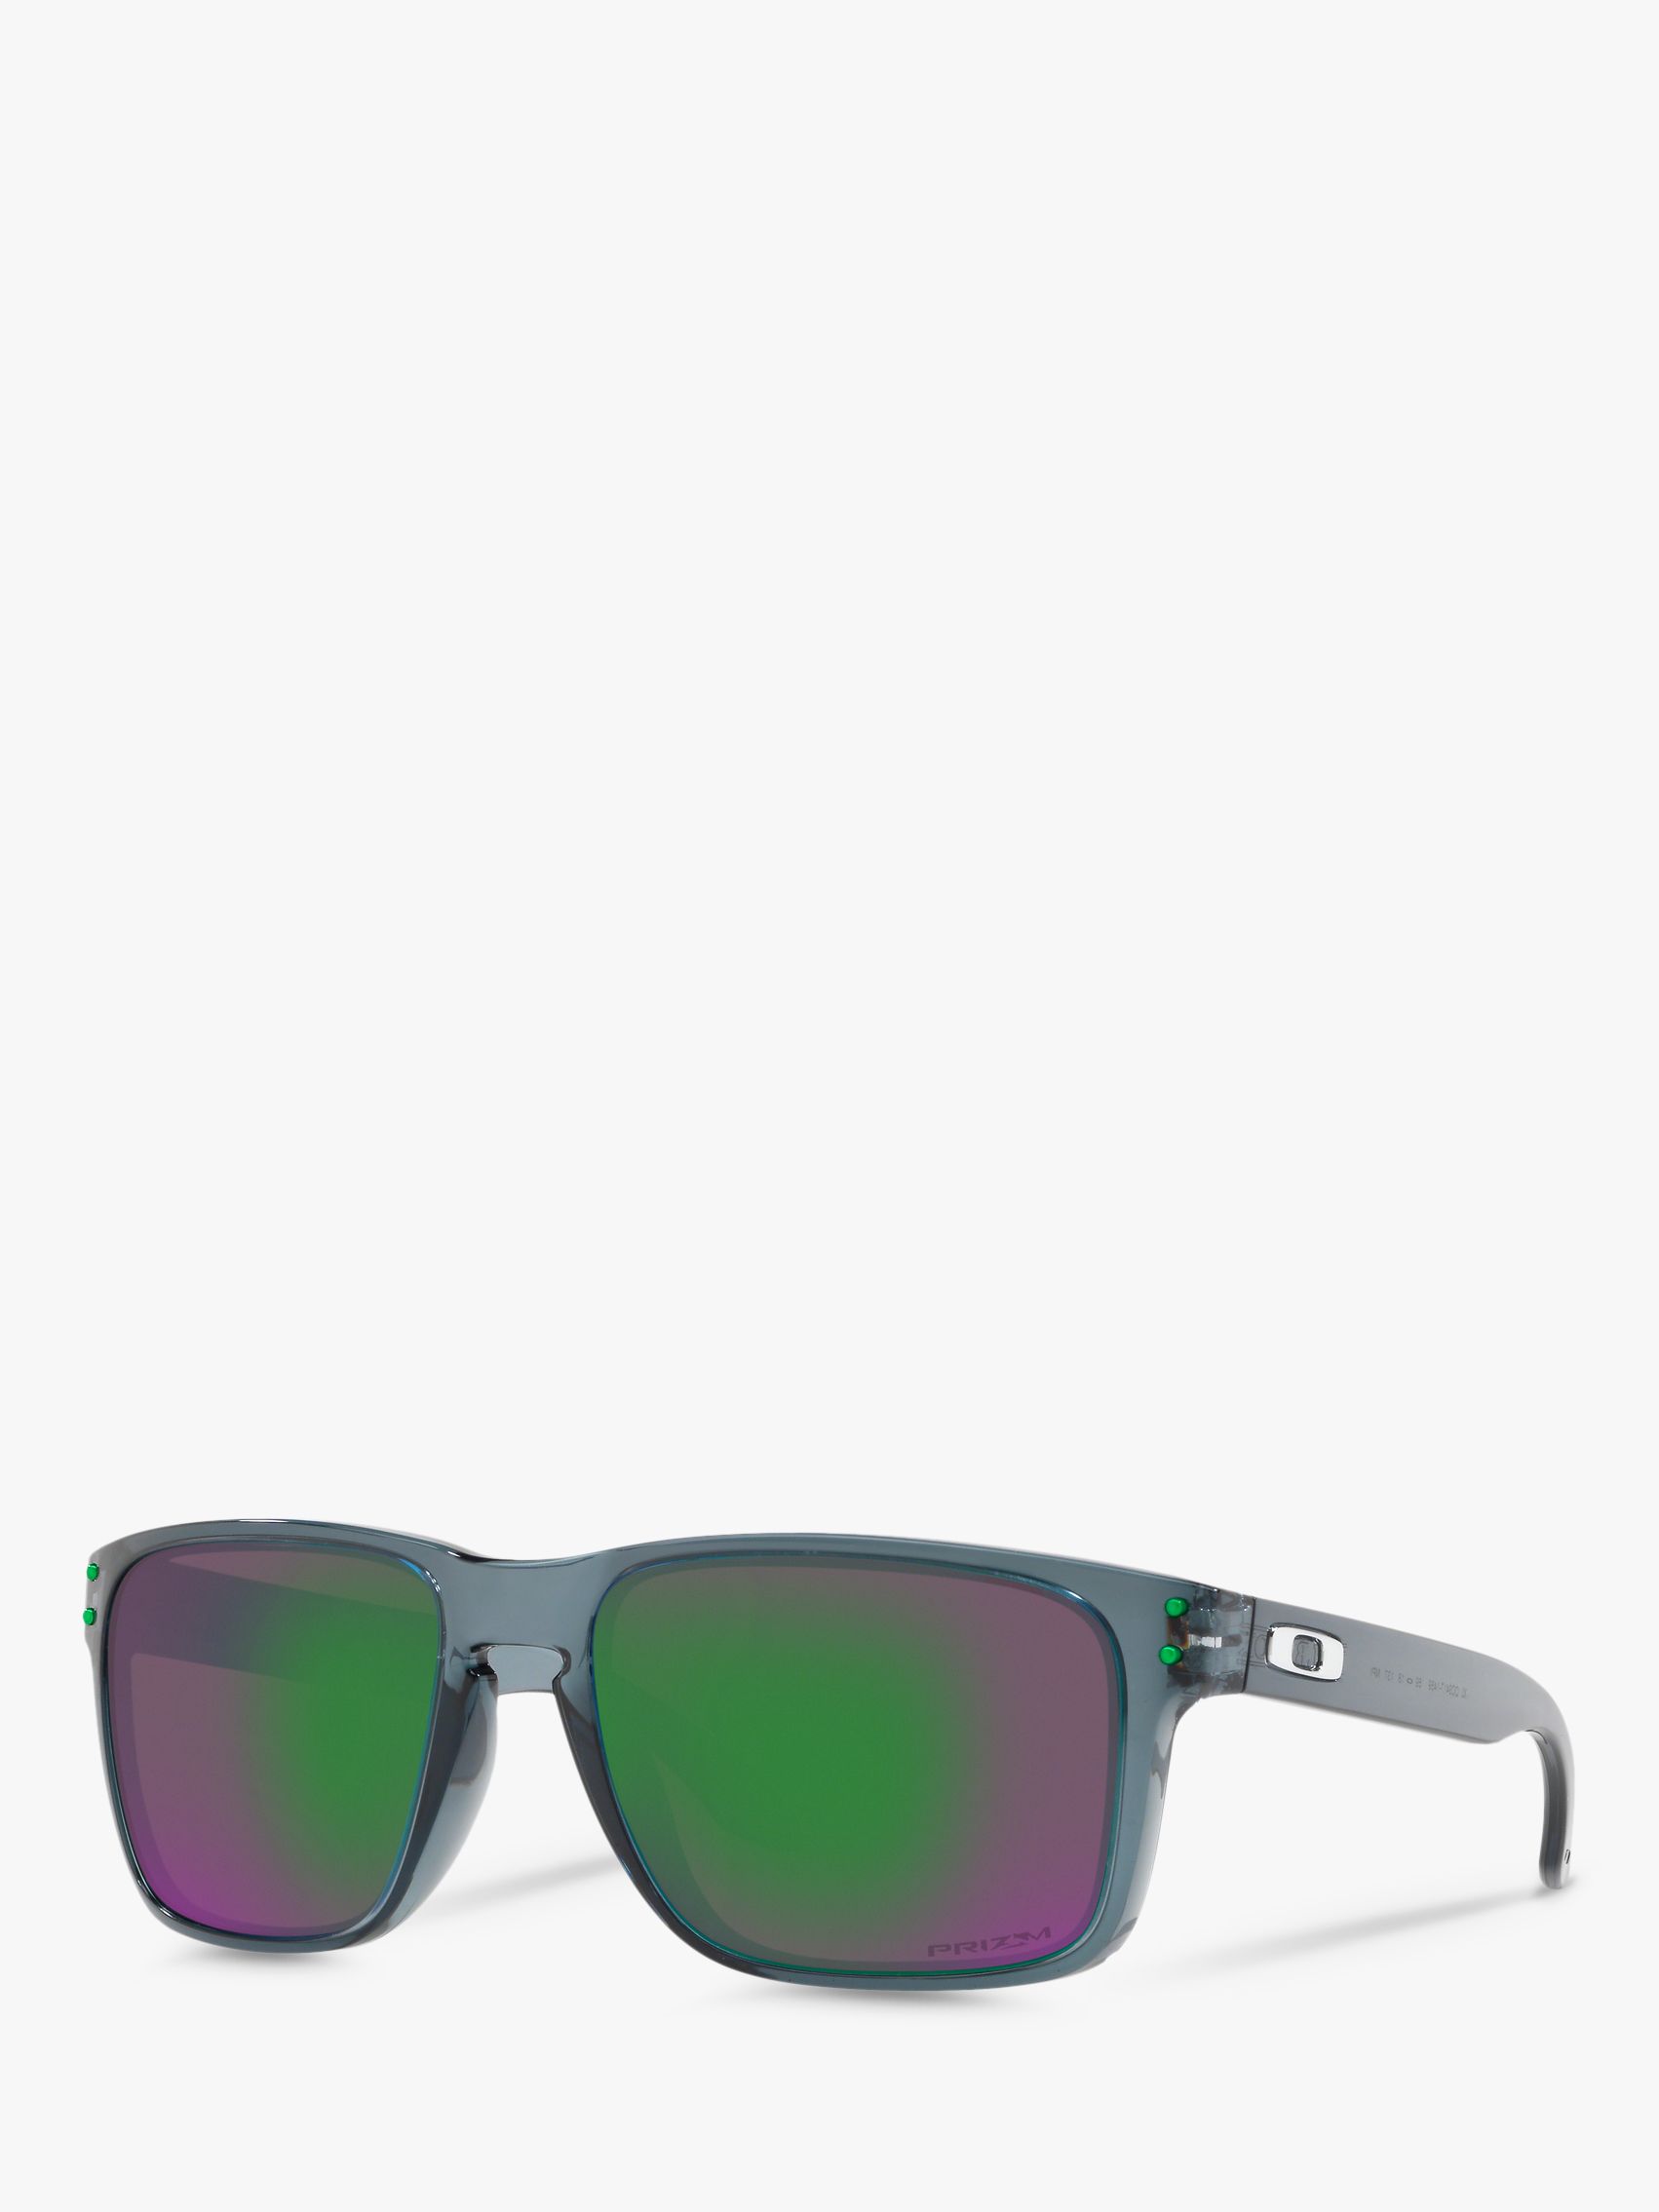 oakley men's holbrook xl sunglasses